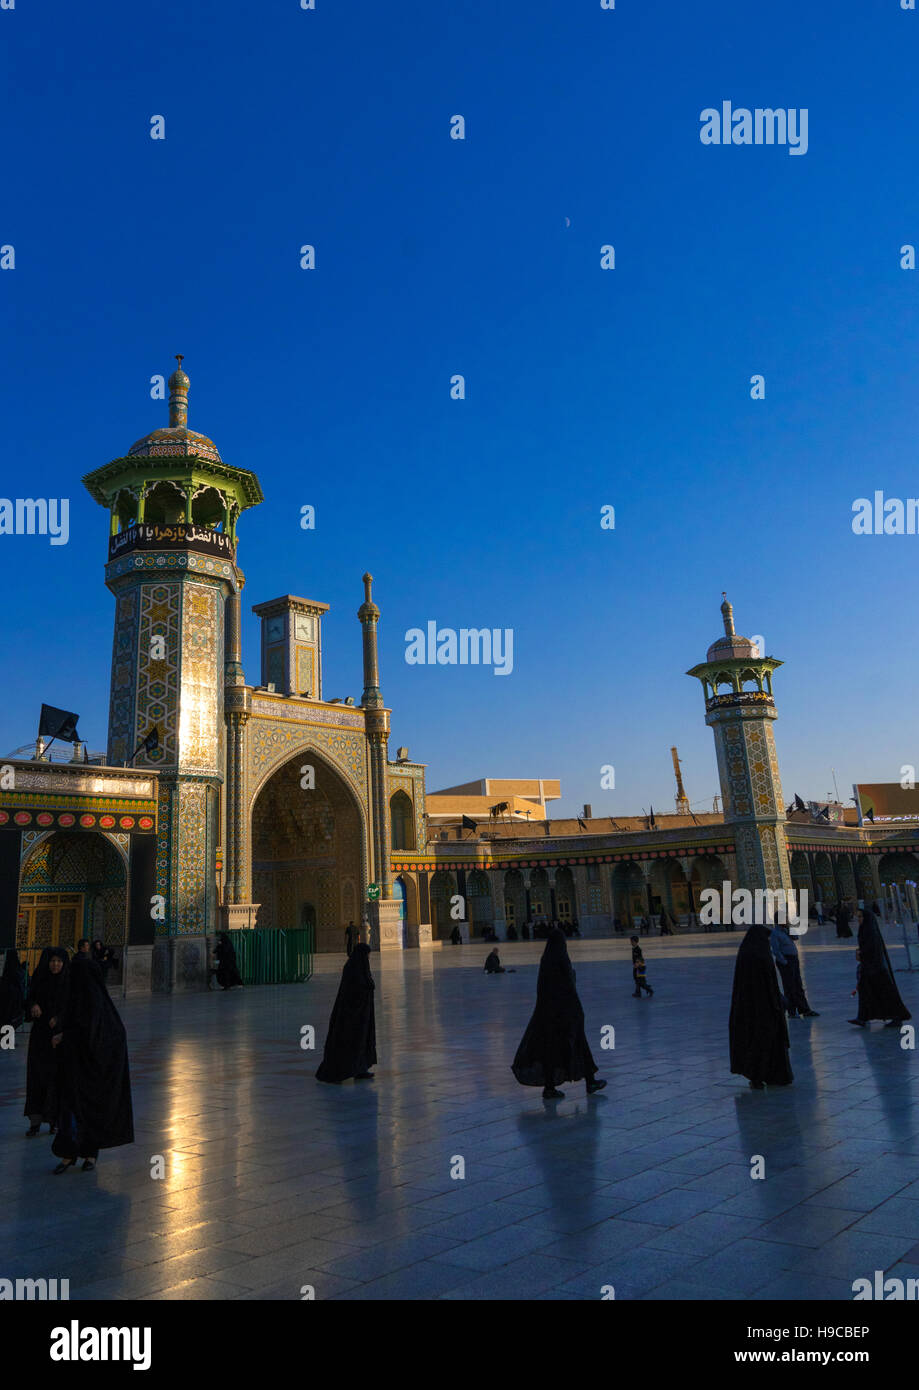 Pilgrims in fatima al-masumeh shrine, Central county, Qom, Iran Stock Photo